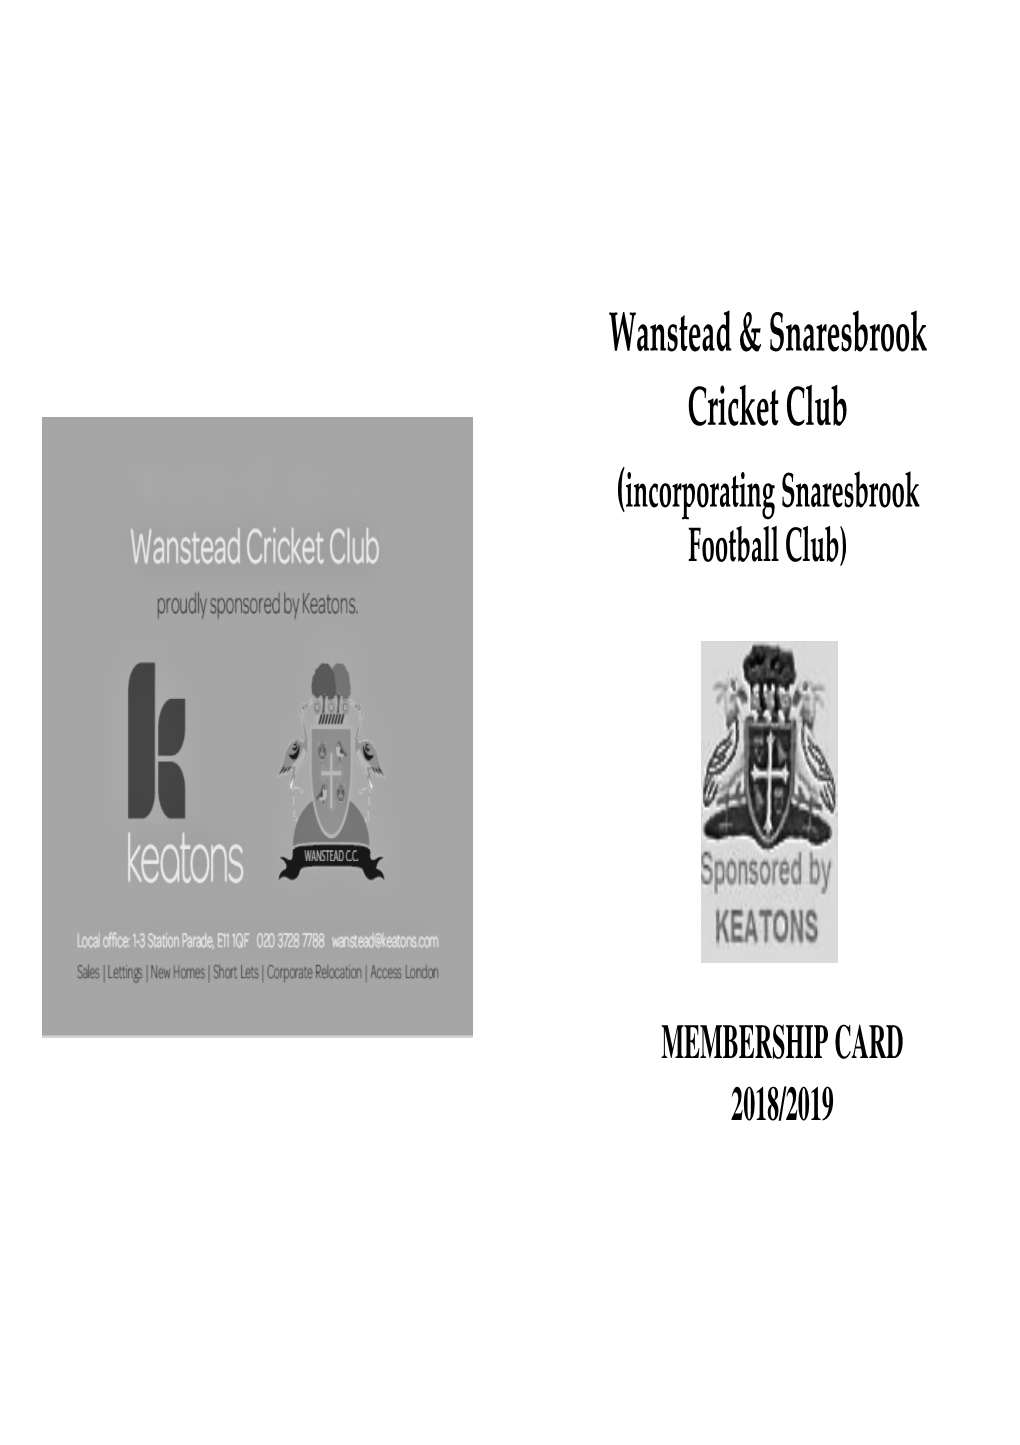 Wanstead & Snaresbrook Cricket Club